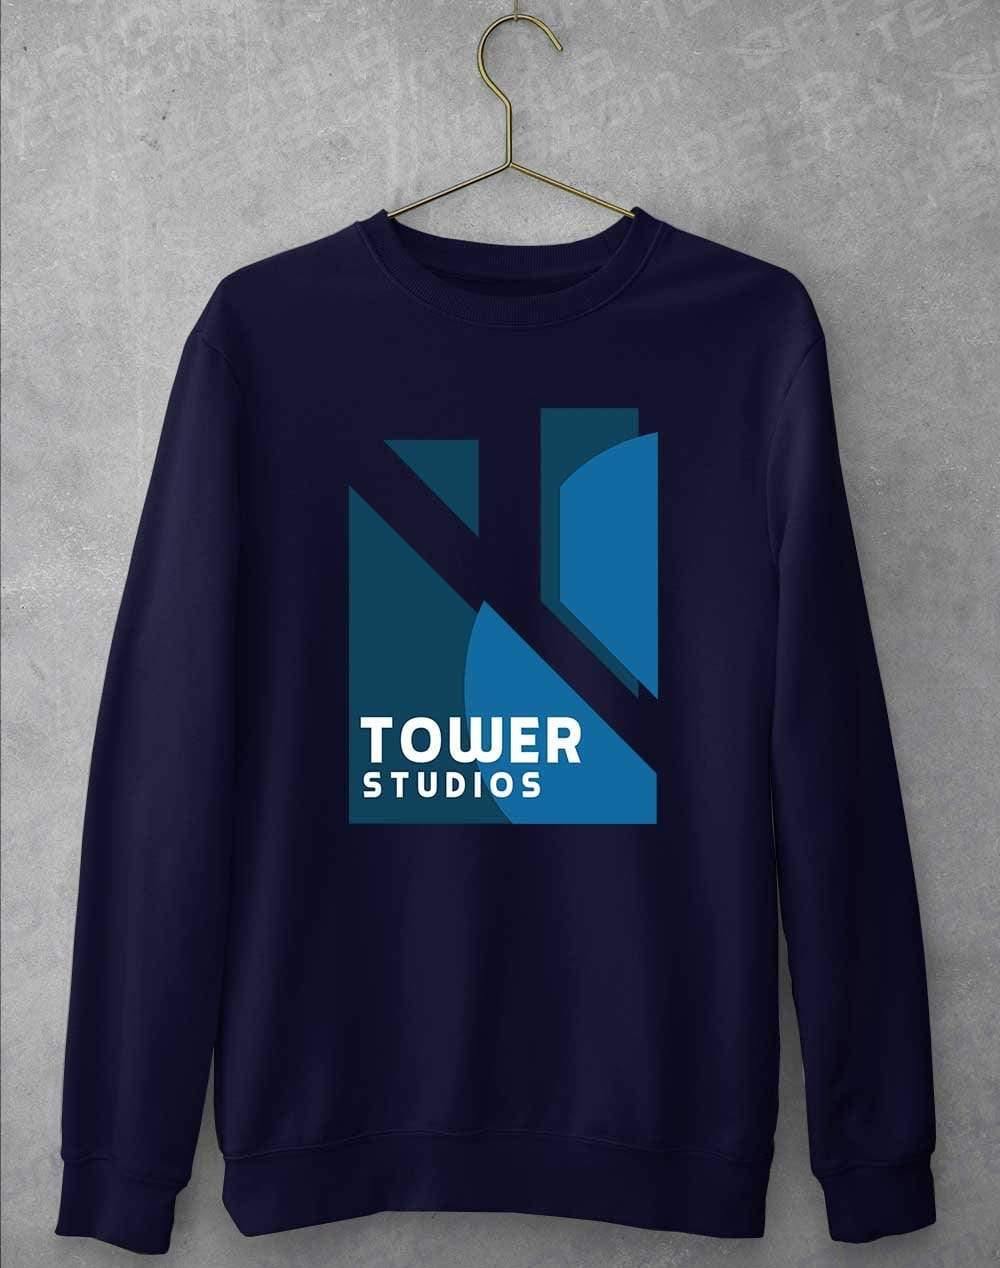 Tower Studios Logo Sweatshirt S / Oxford Navy  - Off World Tees